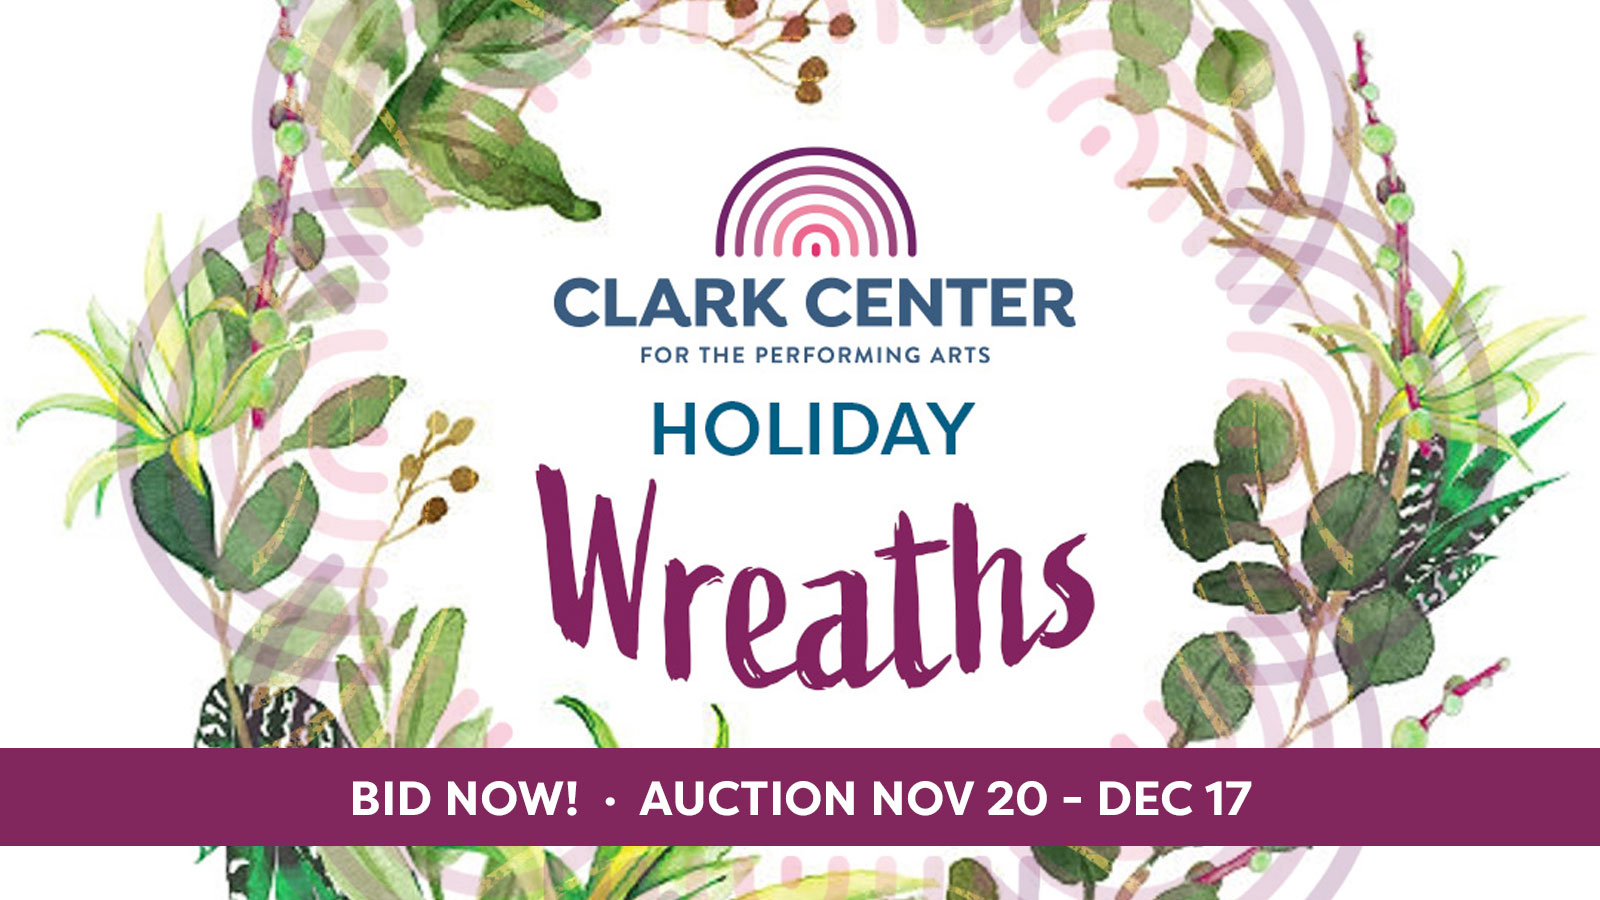 Clark Center Holiday Wreath Auction - Bid Now Nov 20 - Dec 17